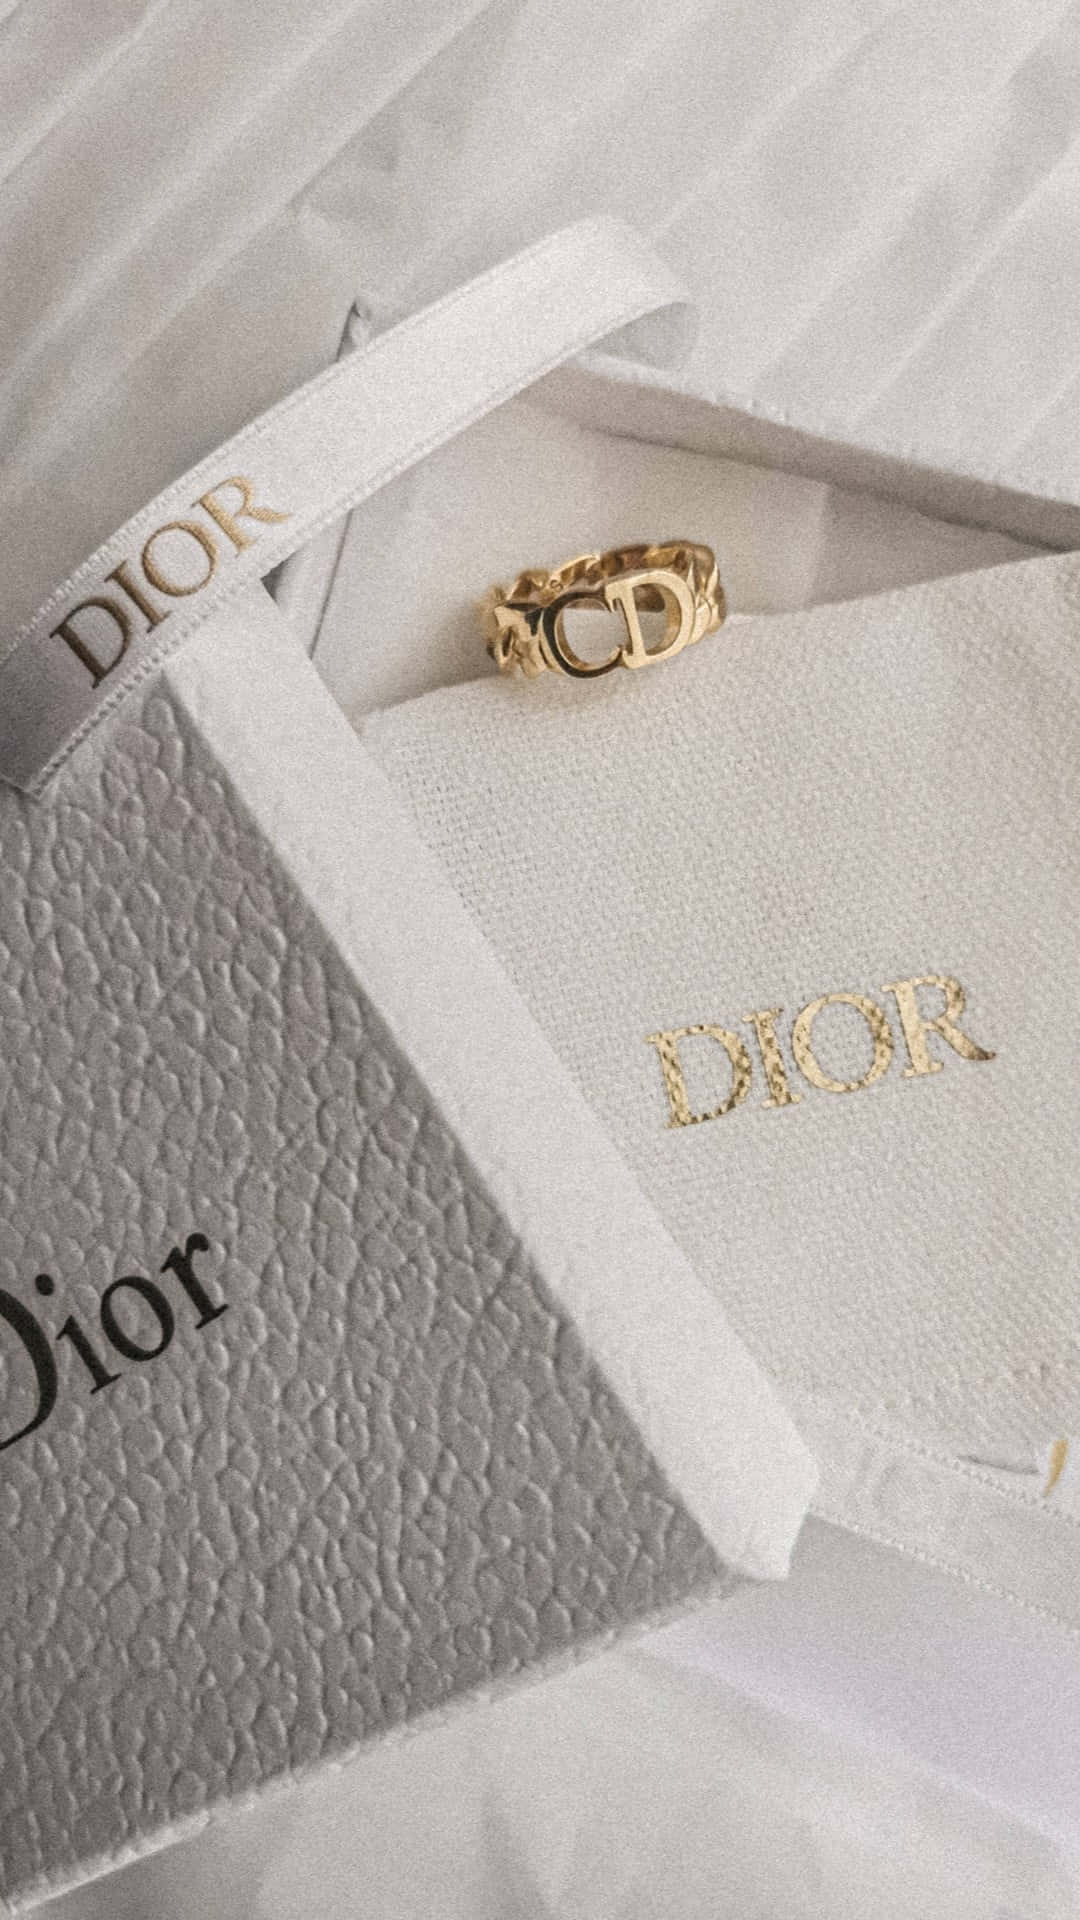 Dior Branded Accessoriesand Jewelry Wallpaper